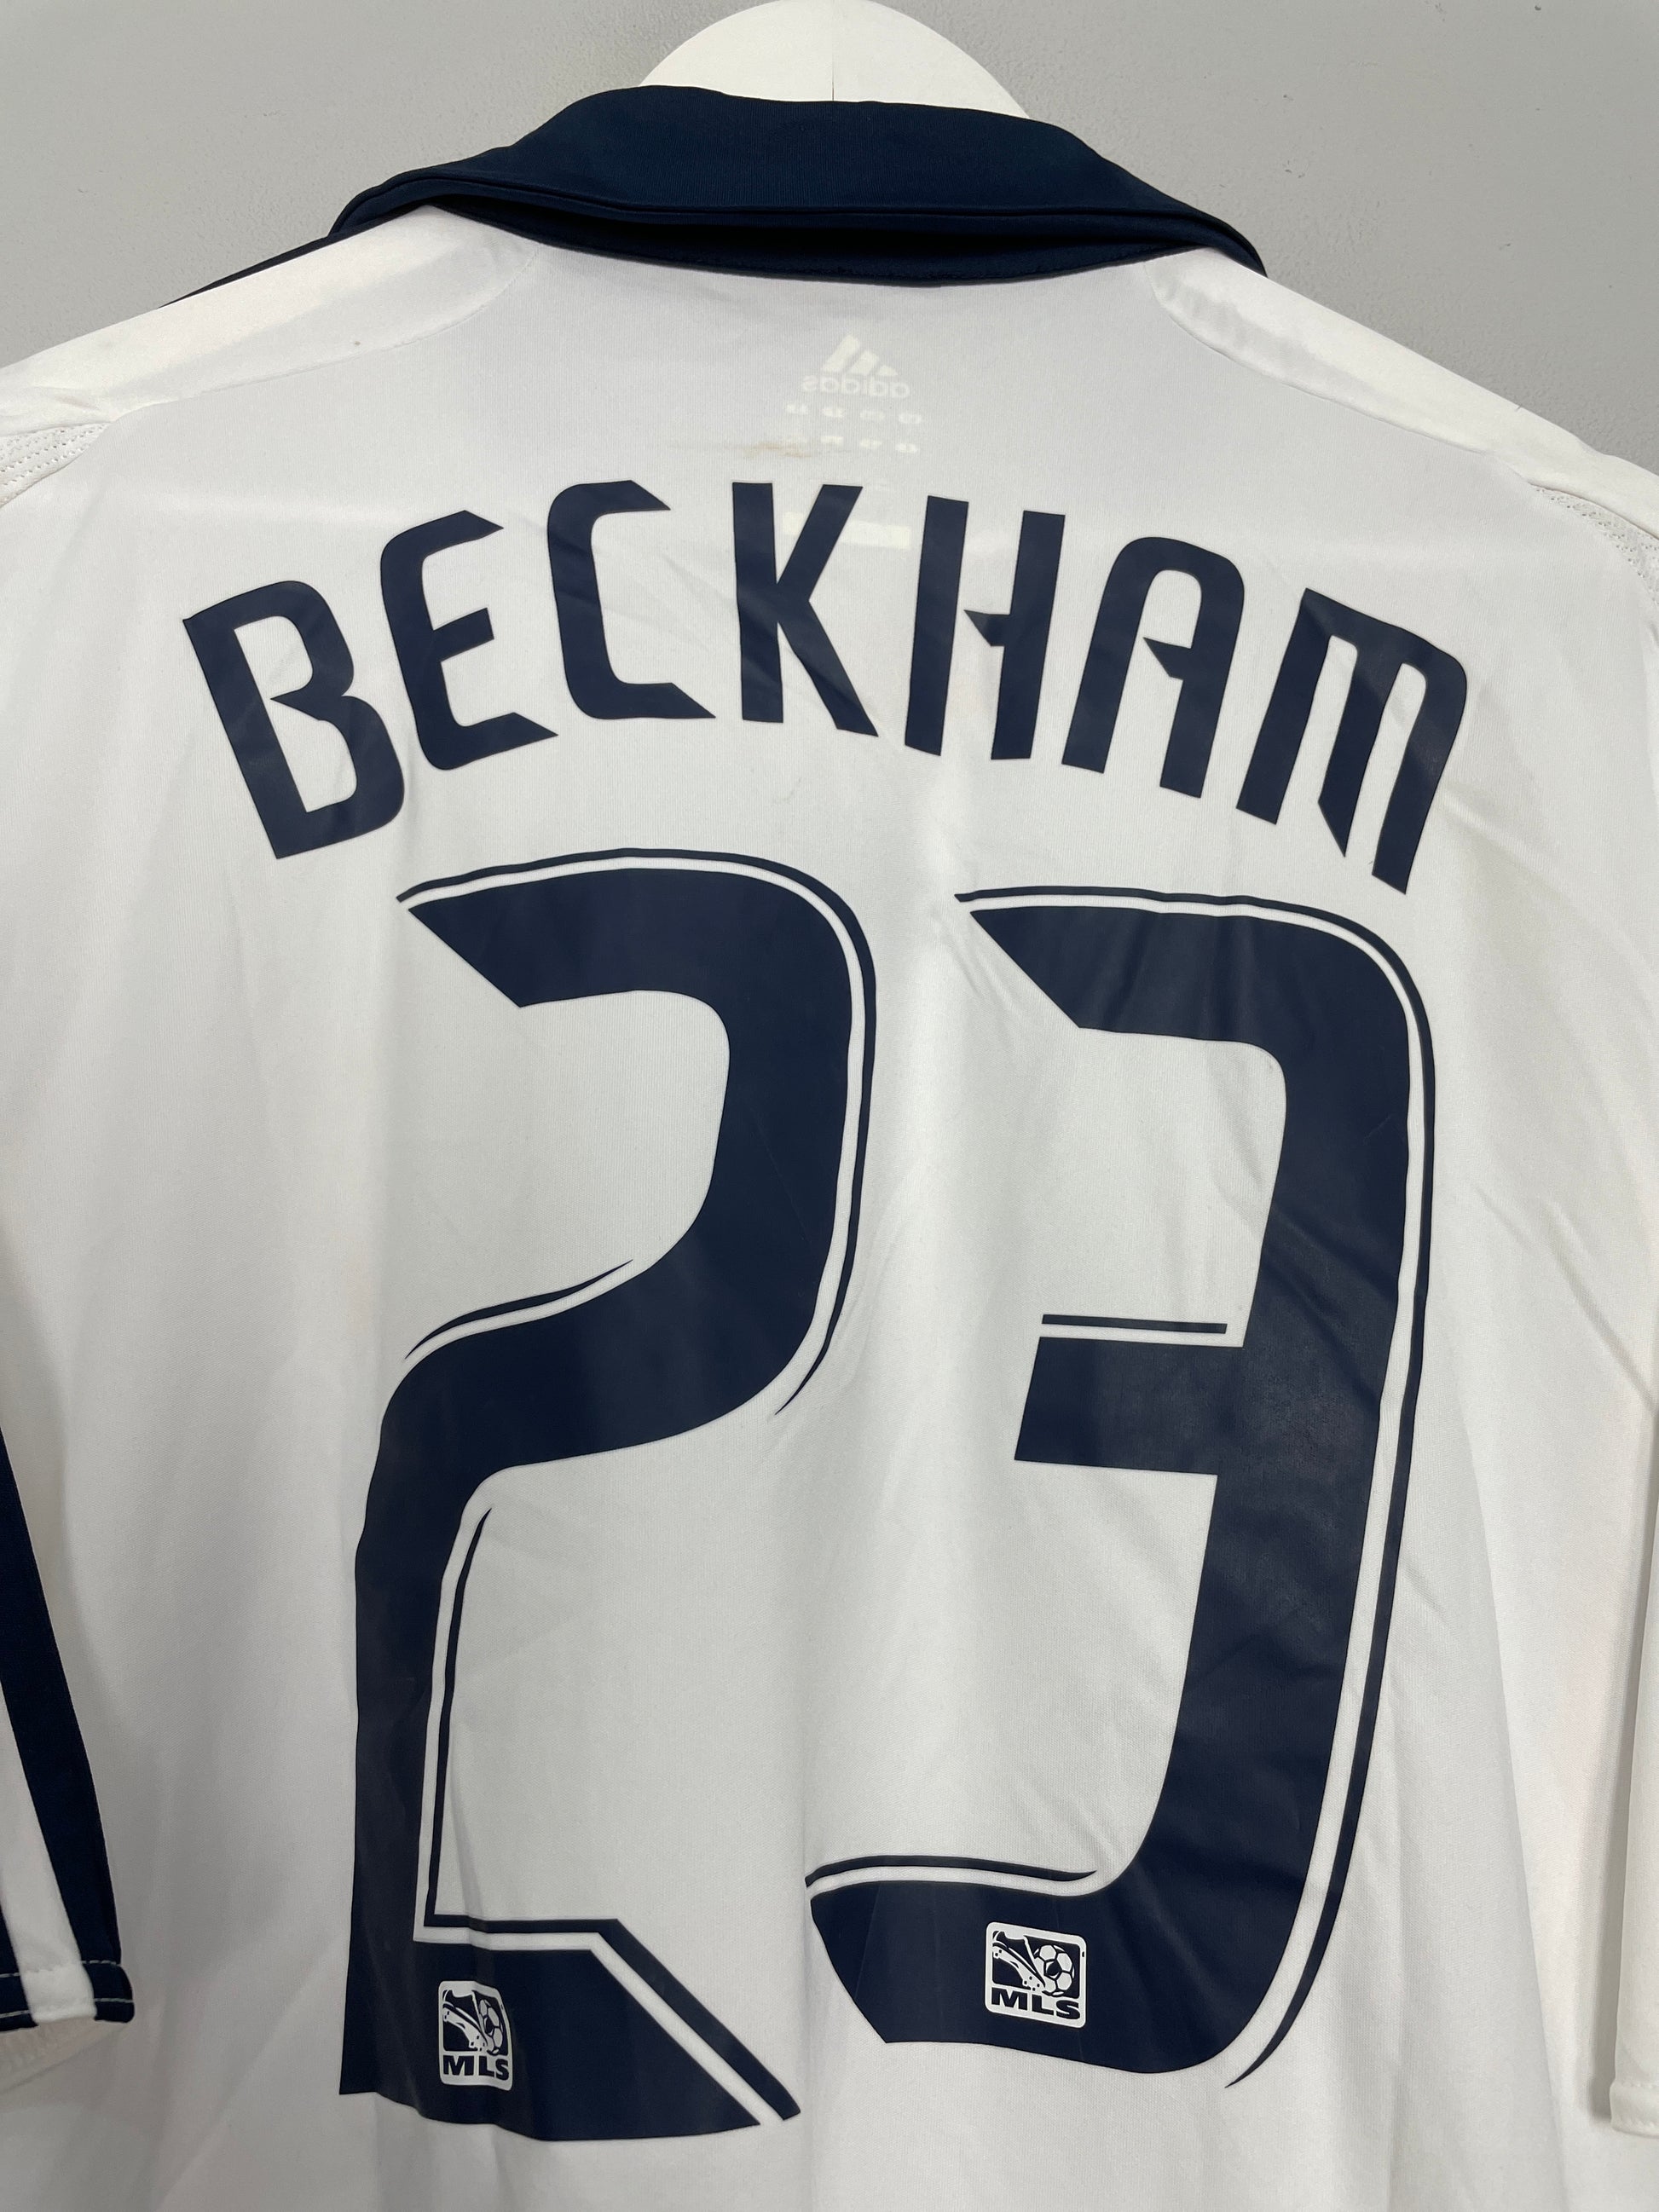 2008-09 LA Galaxy adidas Home Shirt Beckham #23 *w/tags* XL 206710